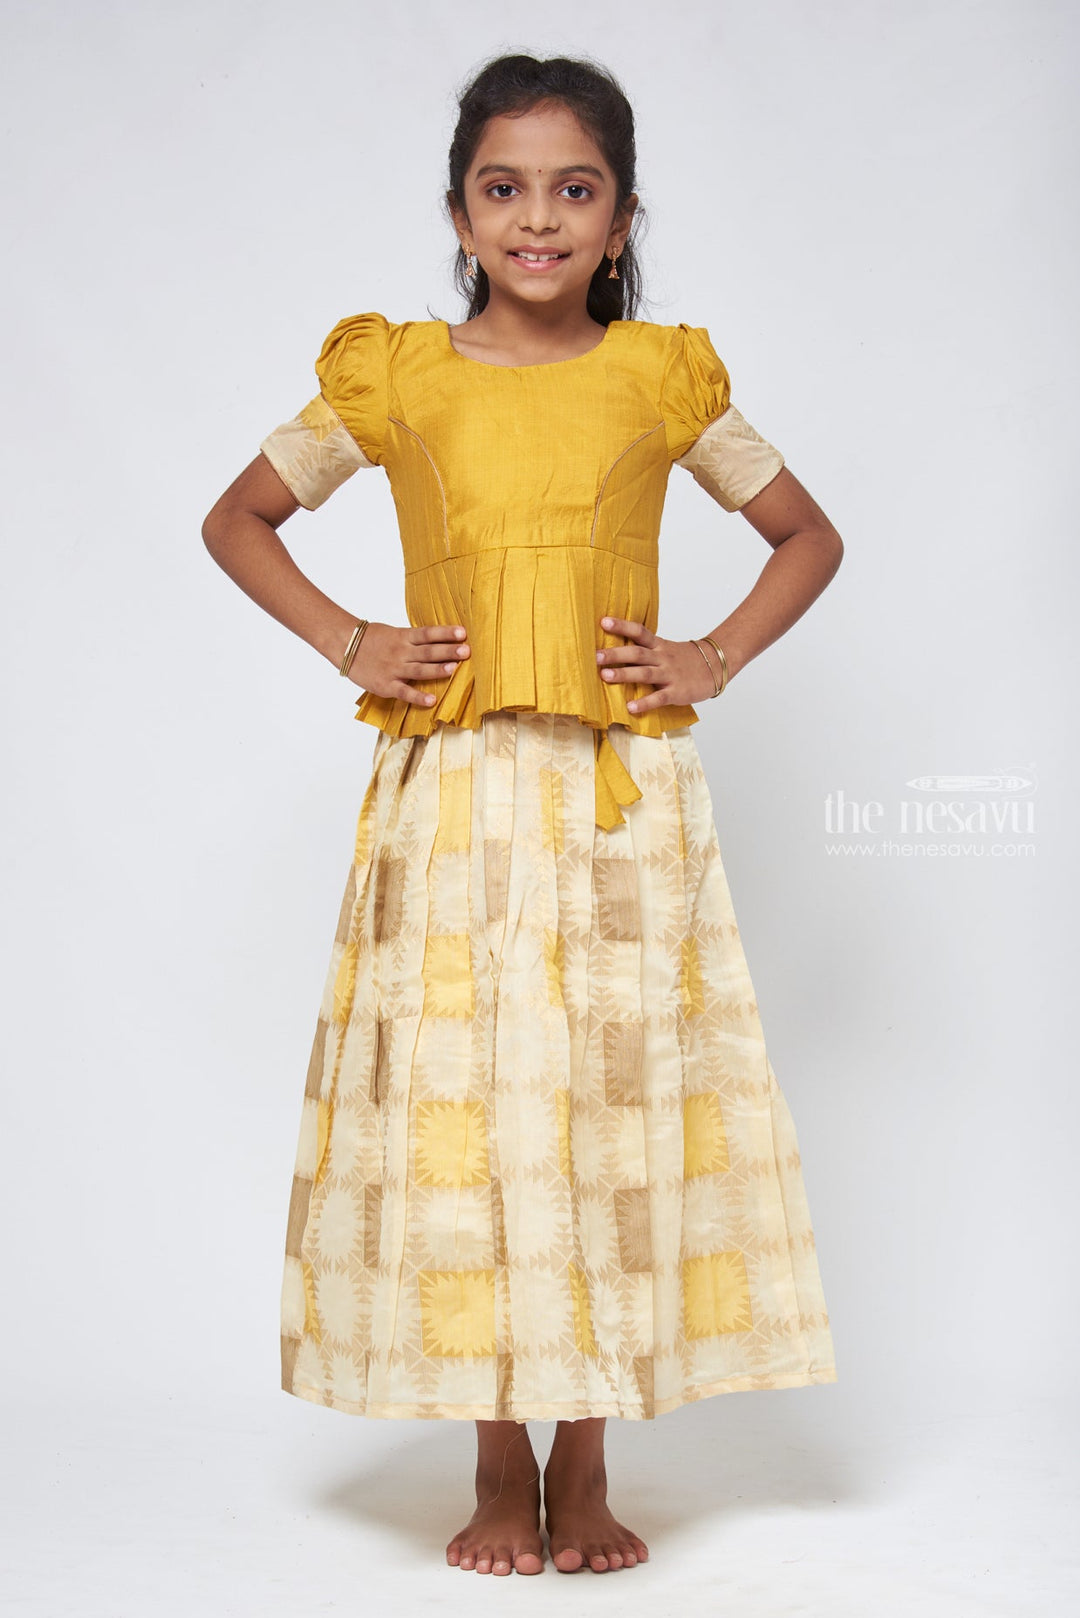 The Nesavu Pattu Pavadai Geometrical Designer Pleated Skirt and Yellow Jacquard Silk Blouse Nesavu 16 (1Y) / Yellow GPP289A-16 Pattu Pavadai Latest Design | Girls Traditional Dress | The Nesavu